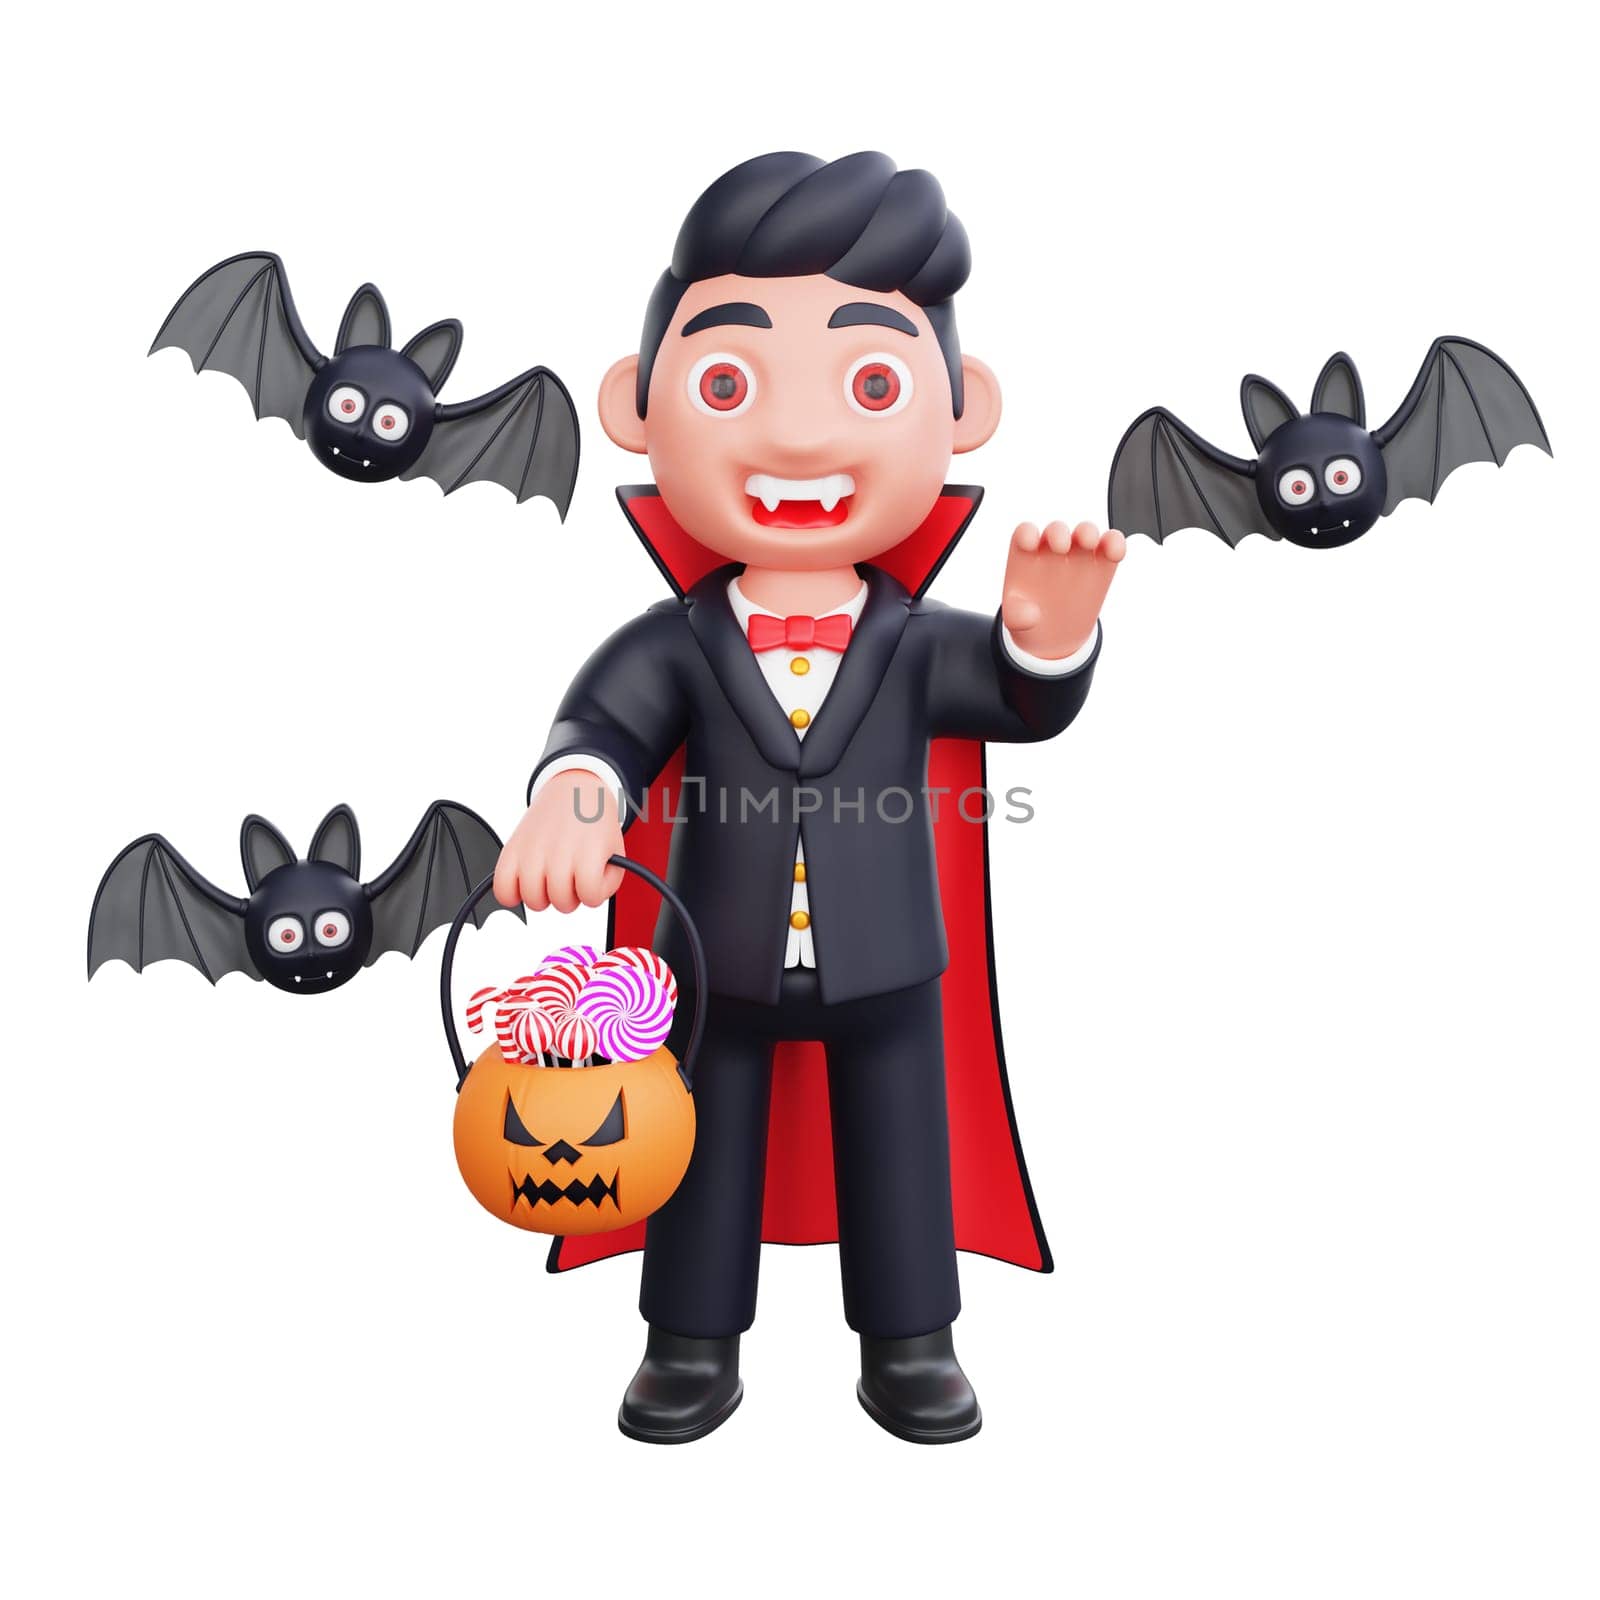 3d cute character halloween vampire scary design illustration